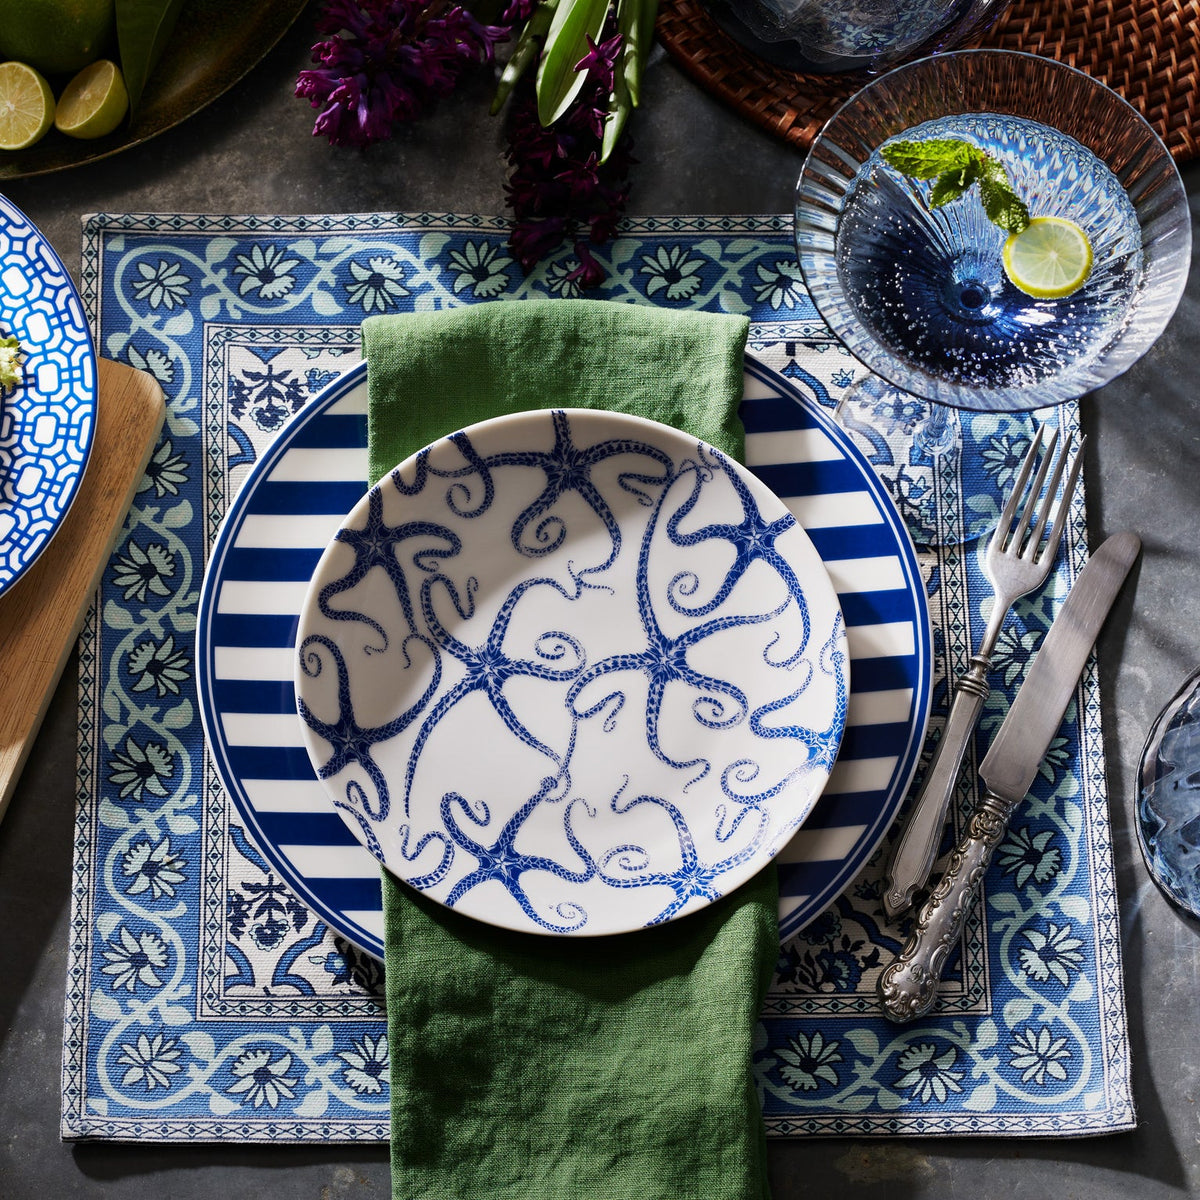 A premium Caskata Artisanal Home porcelain table setting featuring Starfish Blue Coupe Salad plates and napkins.